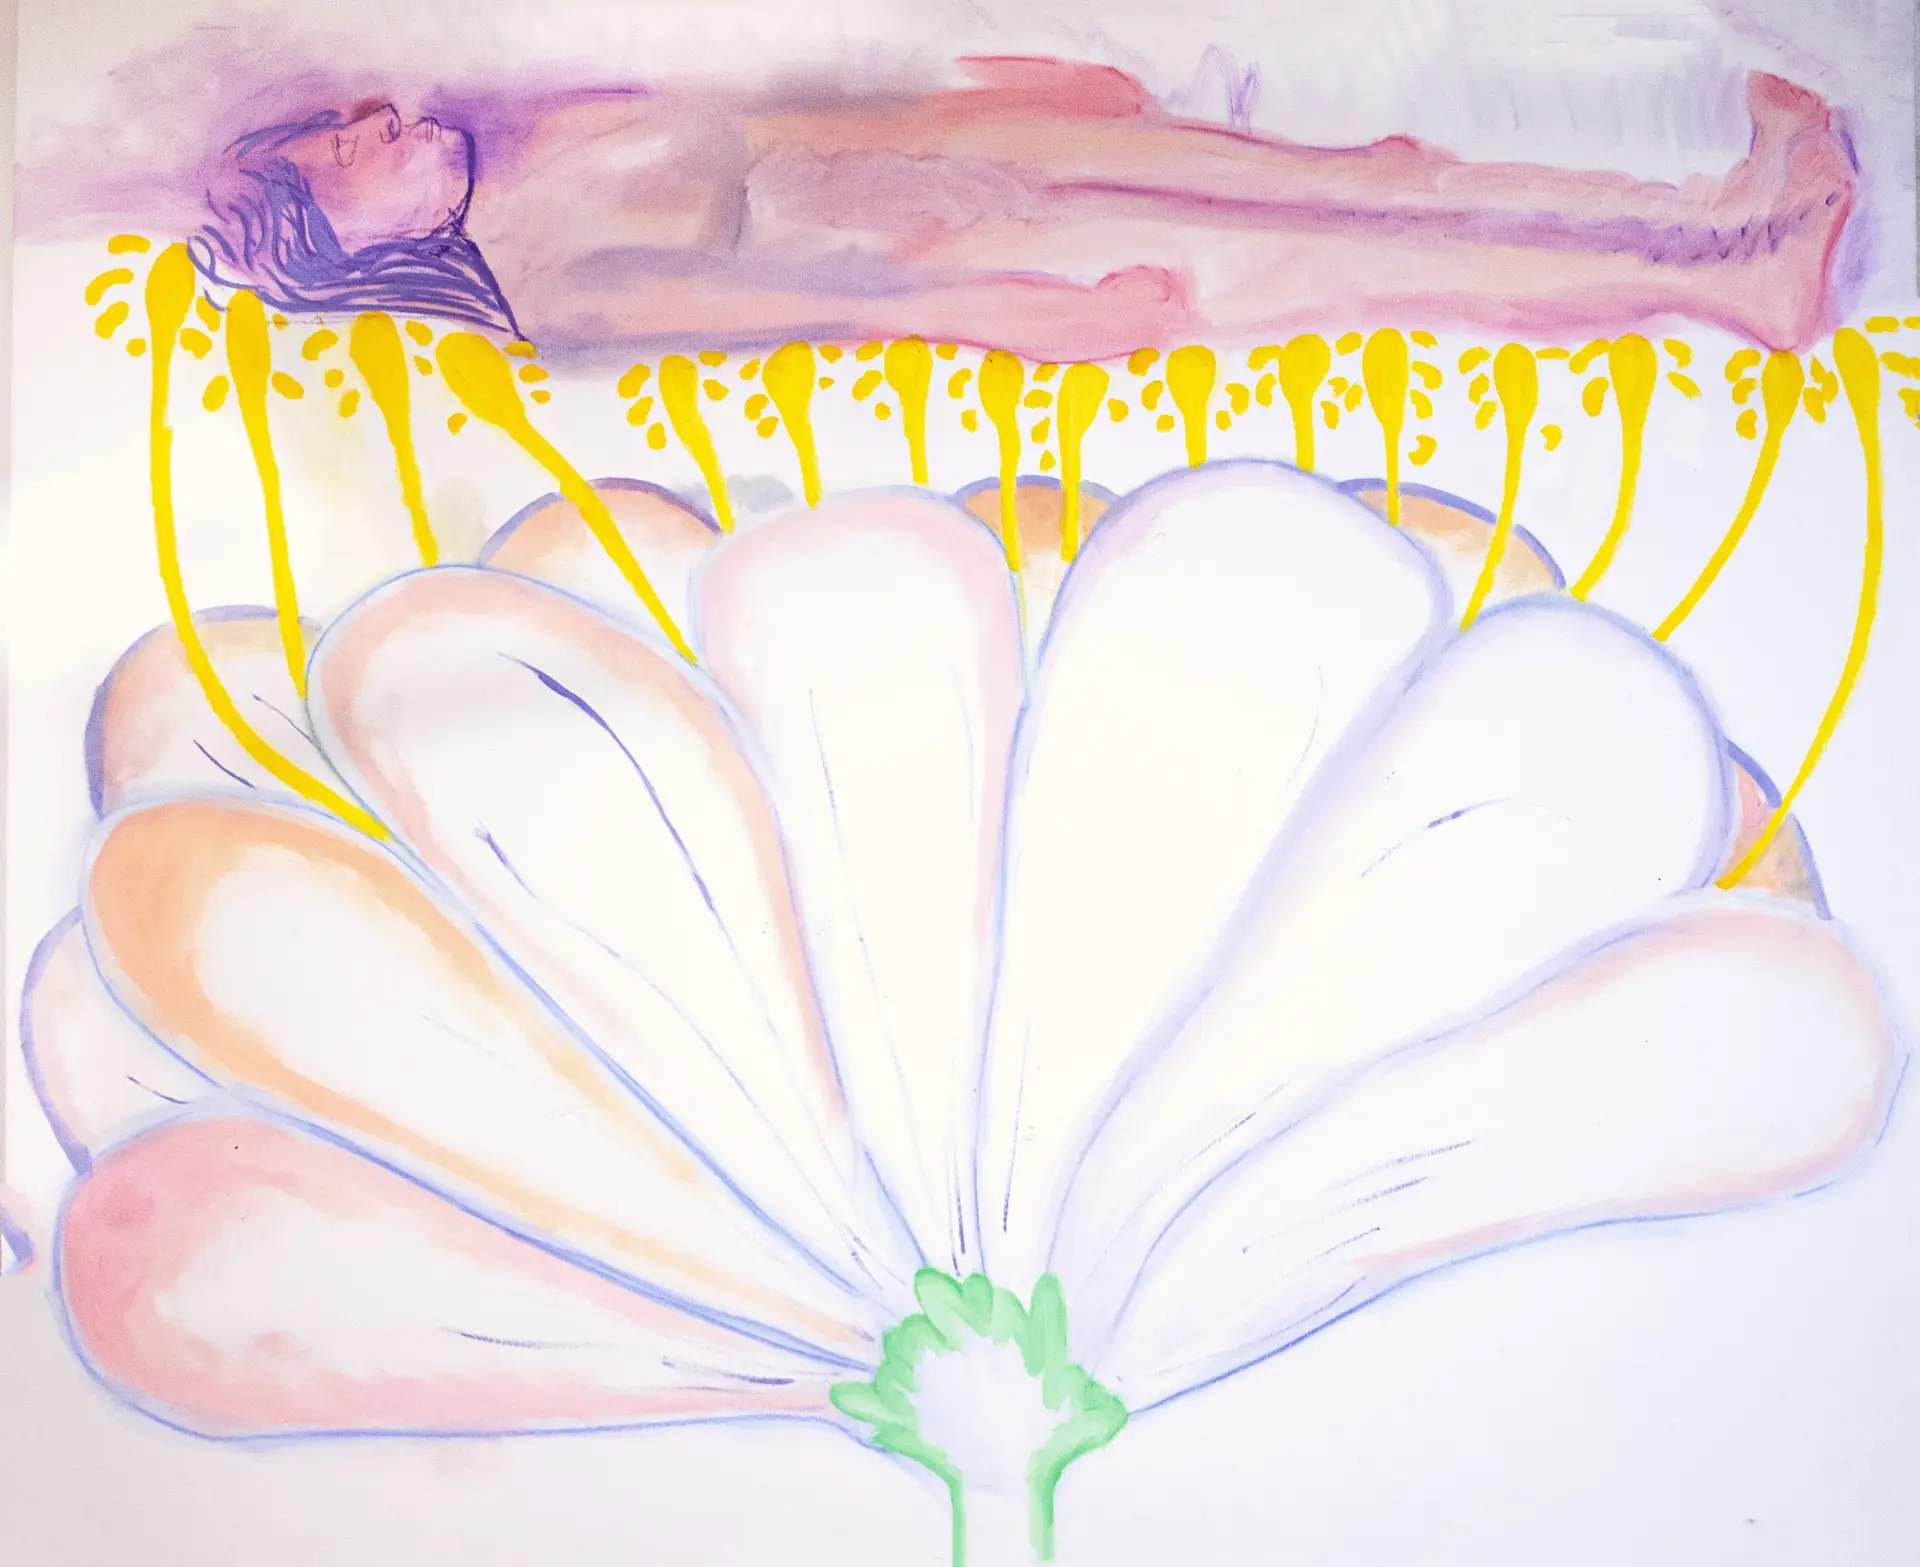 "Connected" (2020), de ADRIANA PROGANÓ. Óleo sobre tela, dimensões 158 x 192 cm